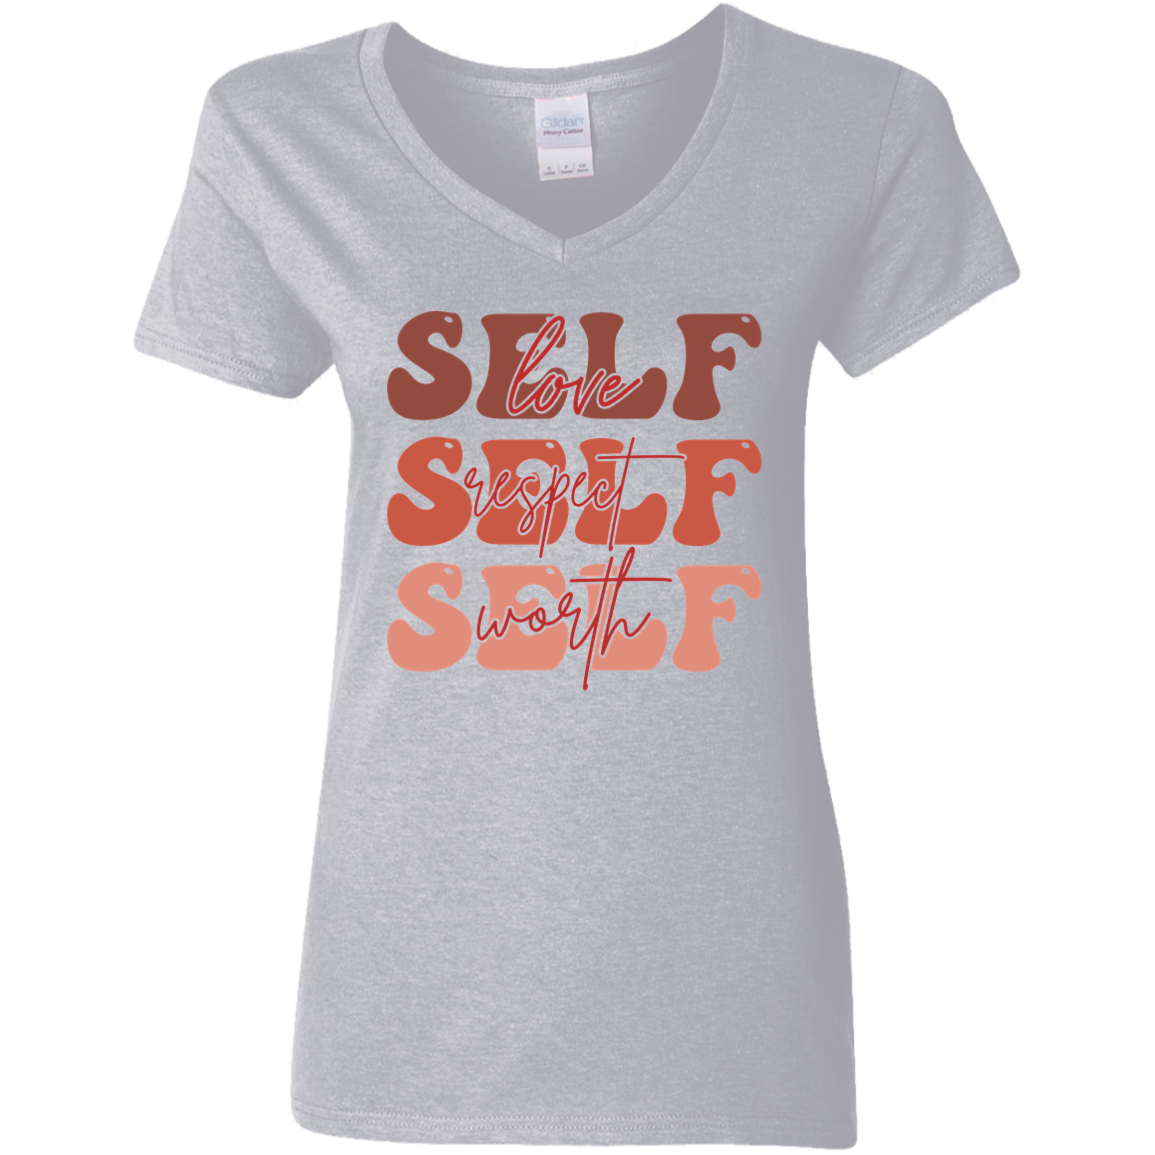 Self Love Respect Worth |  Premium Short Sleeve Ladies' V-Neck T-Shirt